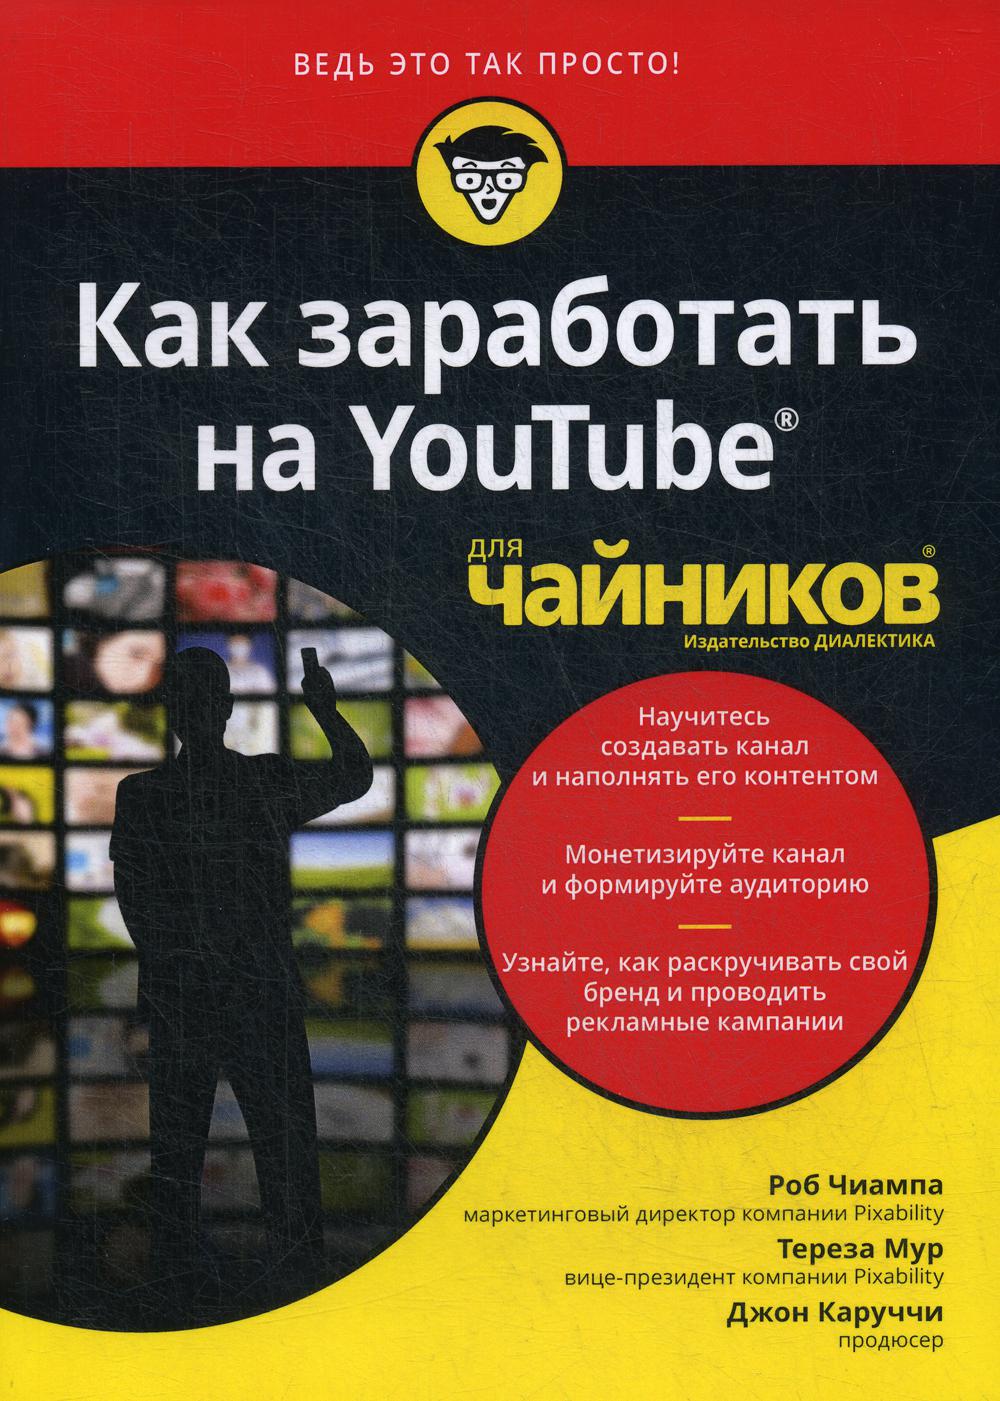      YouTube